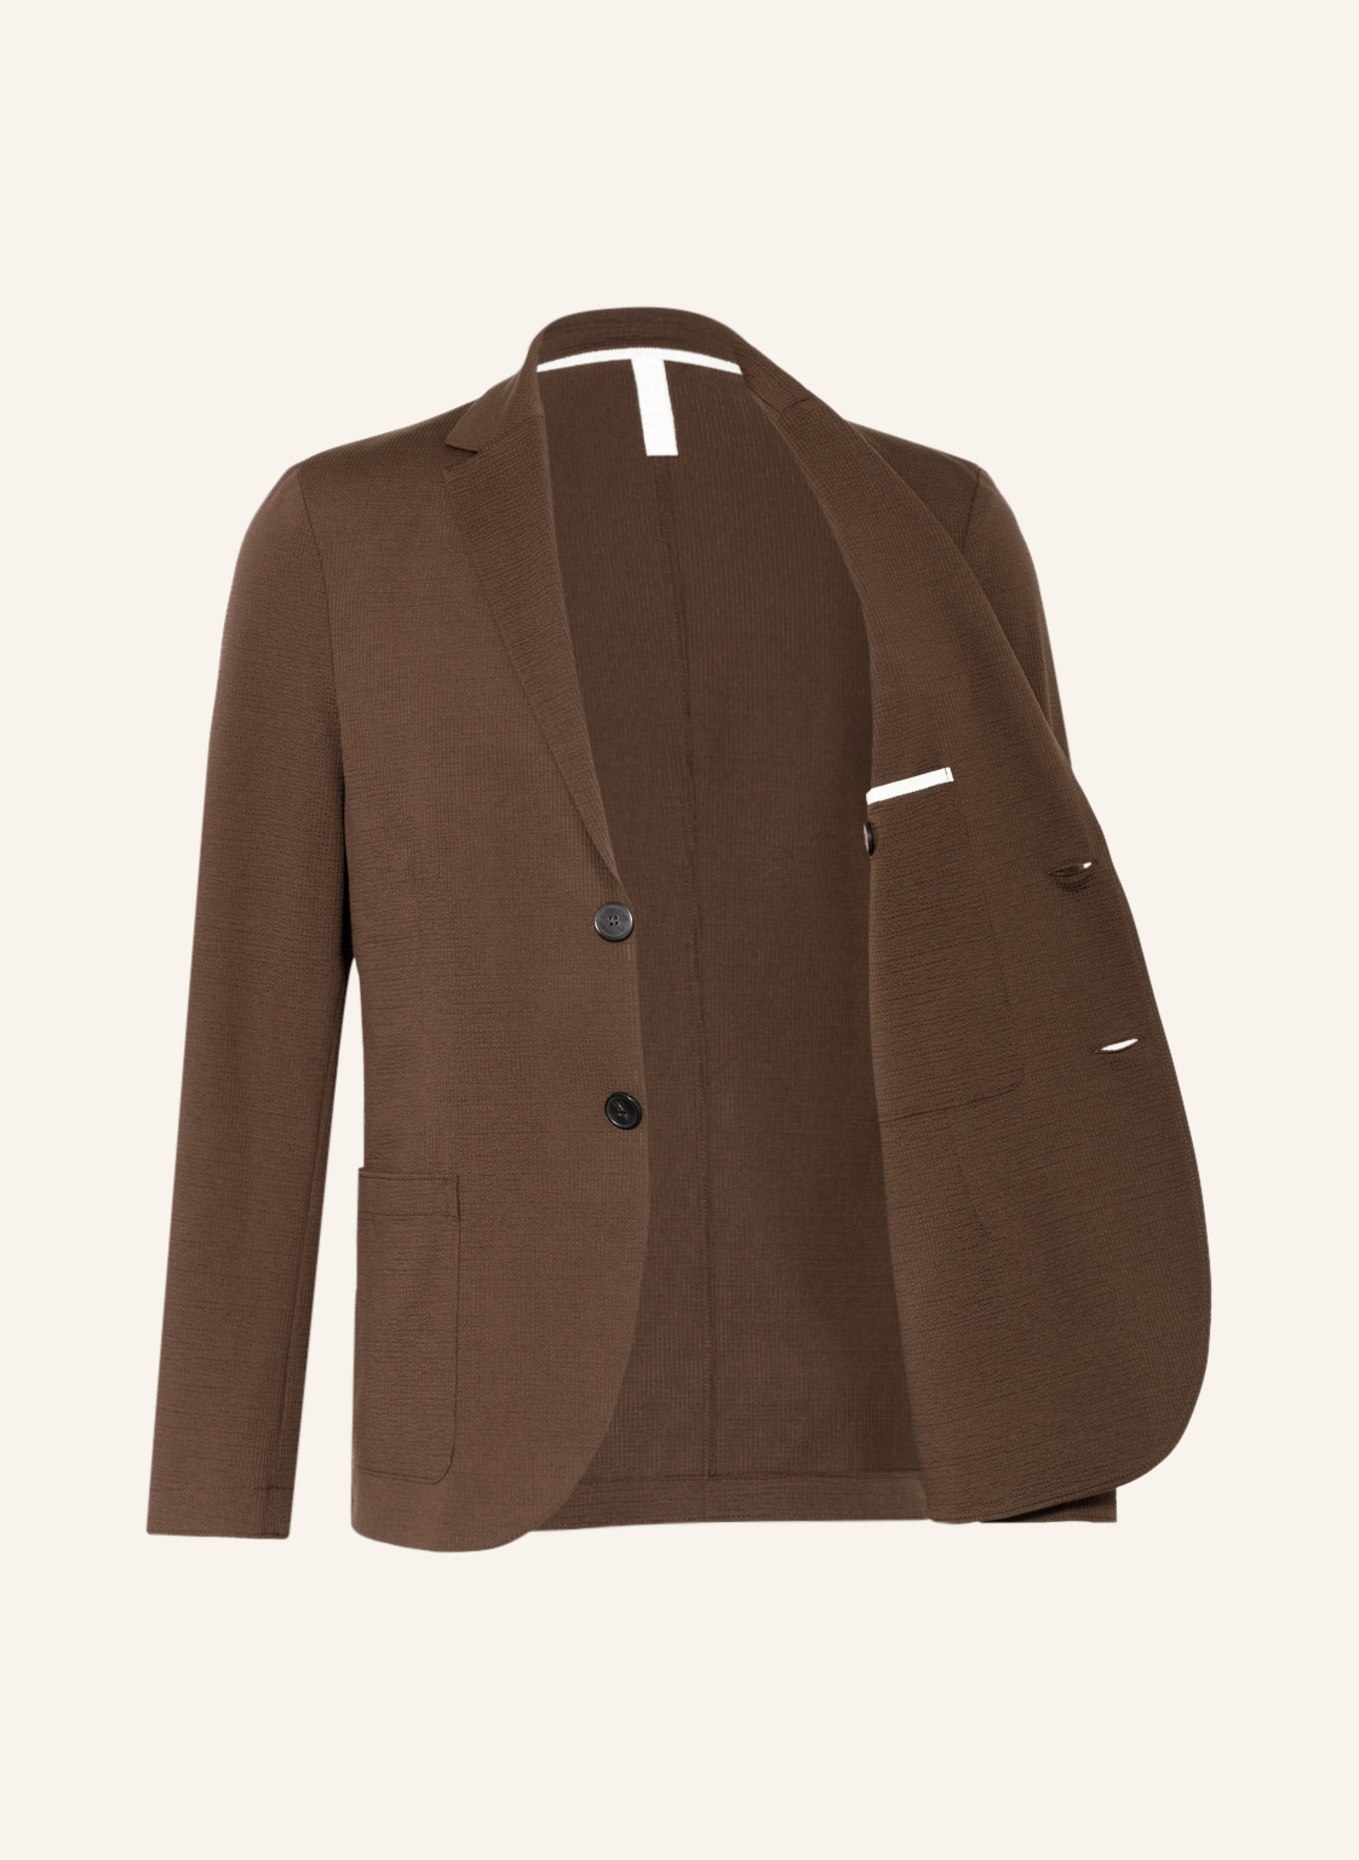 HARRIS WHARF LONDON Suit jacket regular fit, Color: 448 Brown (Image 4)